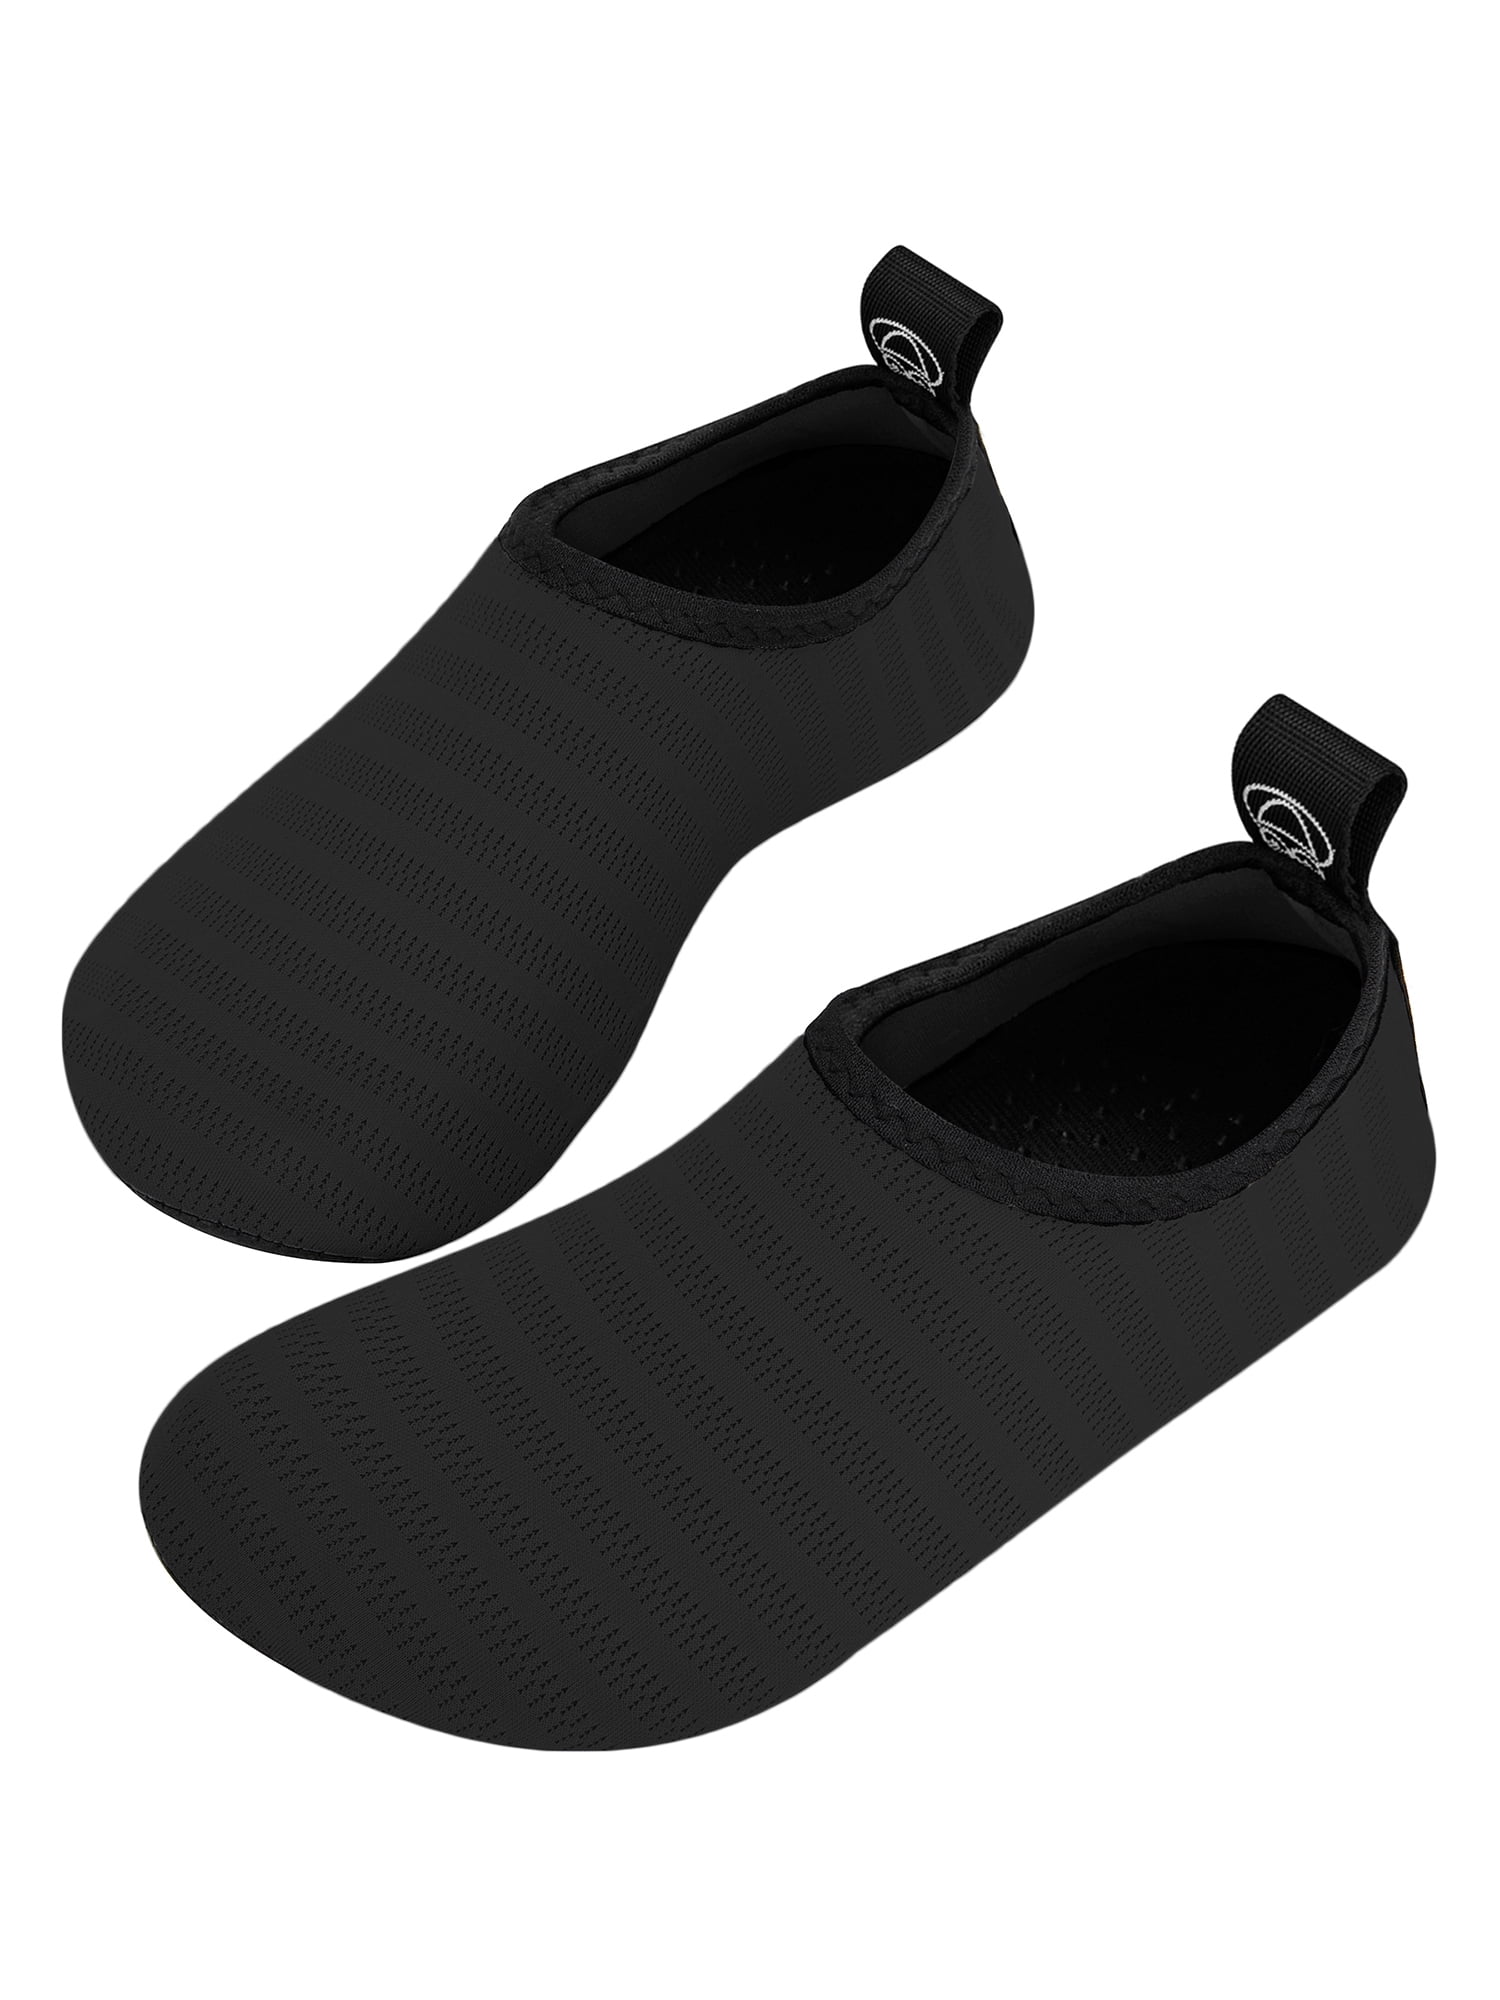 Water Shoes Quick-Dry black Barefoot Skin Men Swim Shoes Aqua Water Socks 